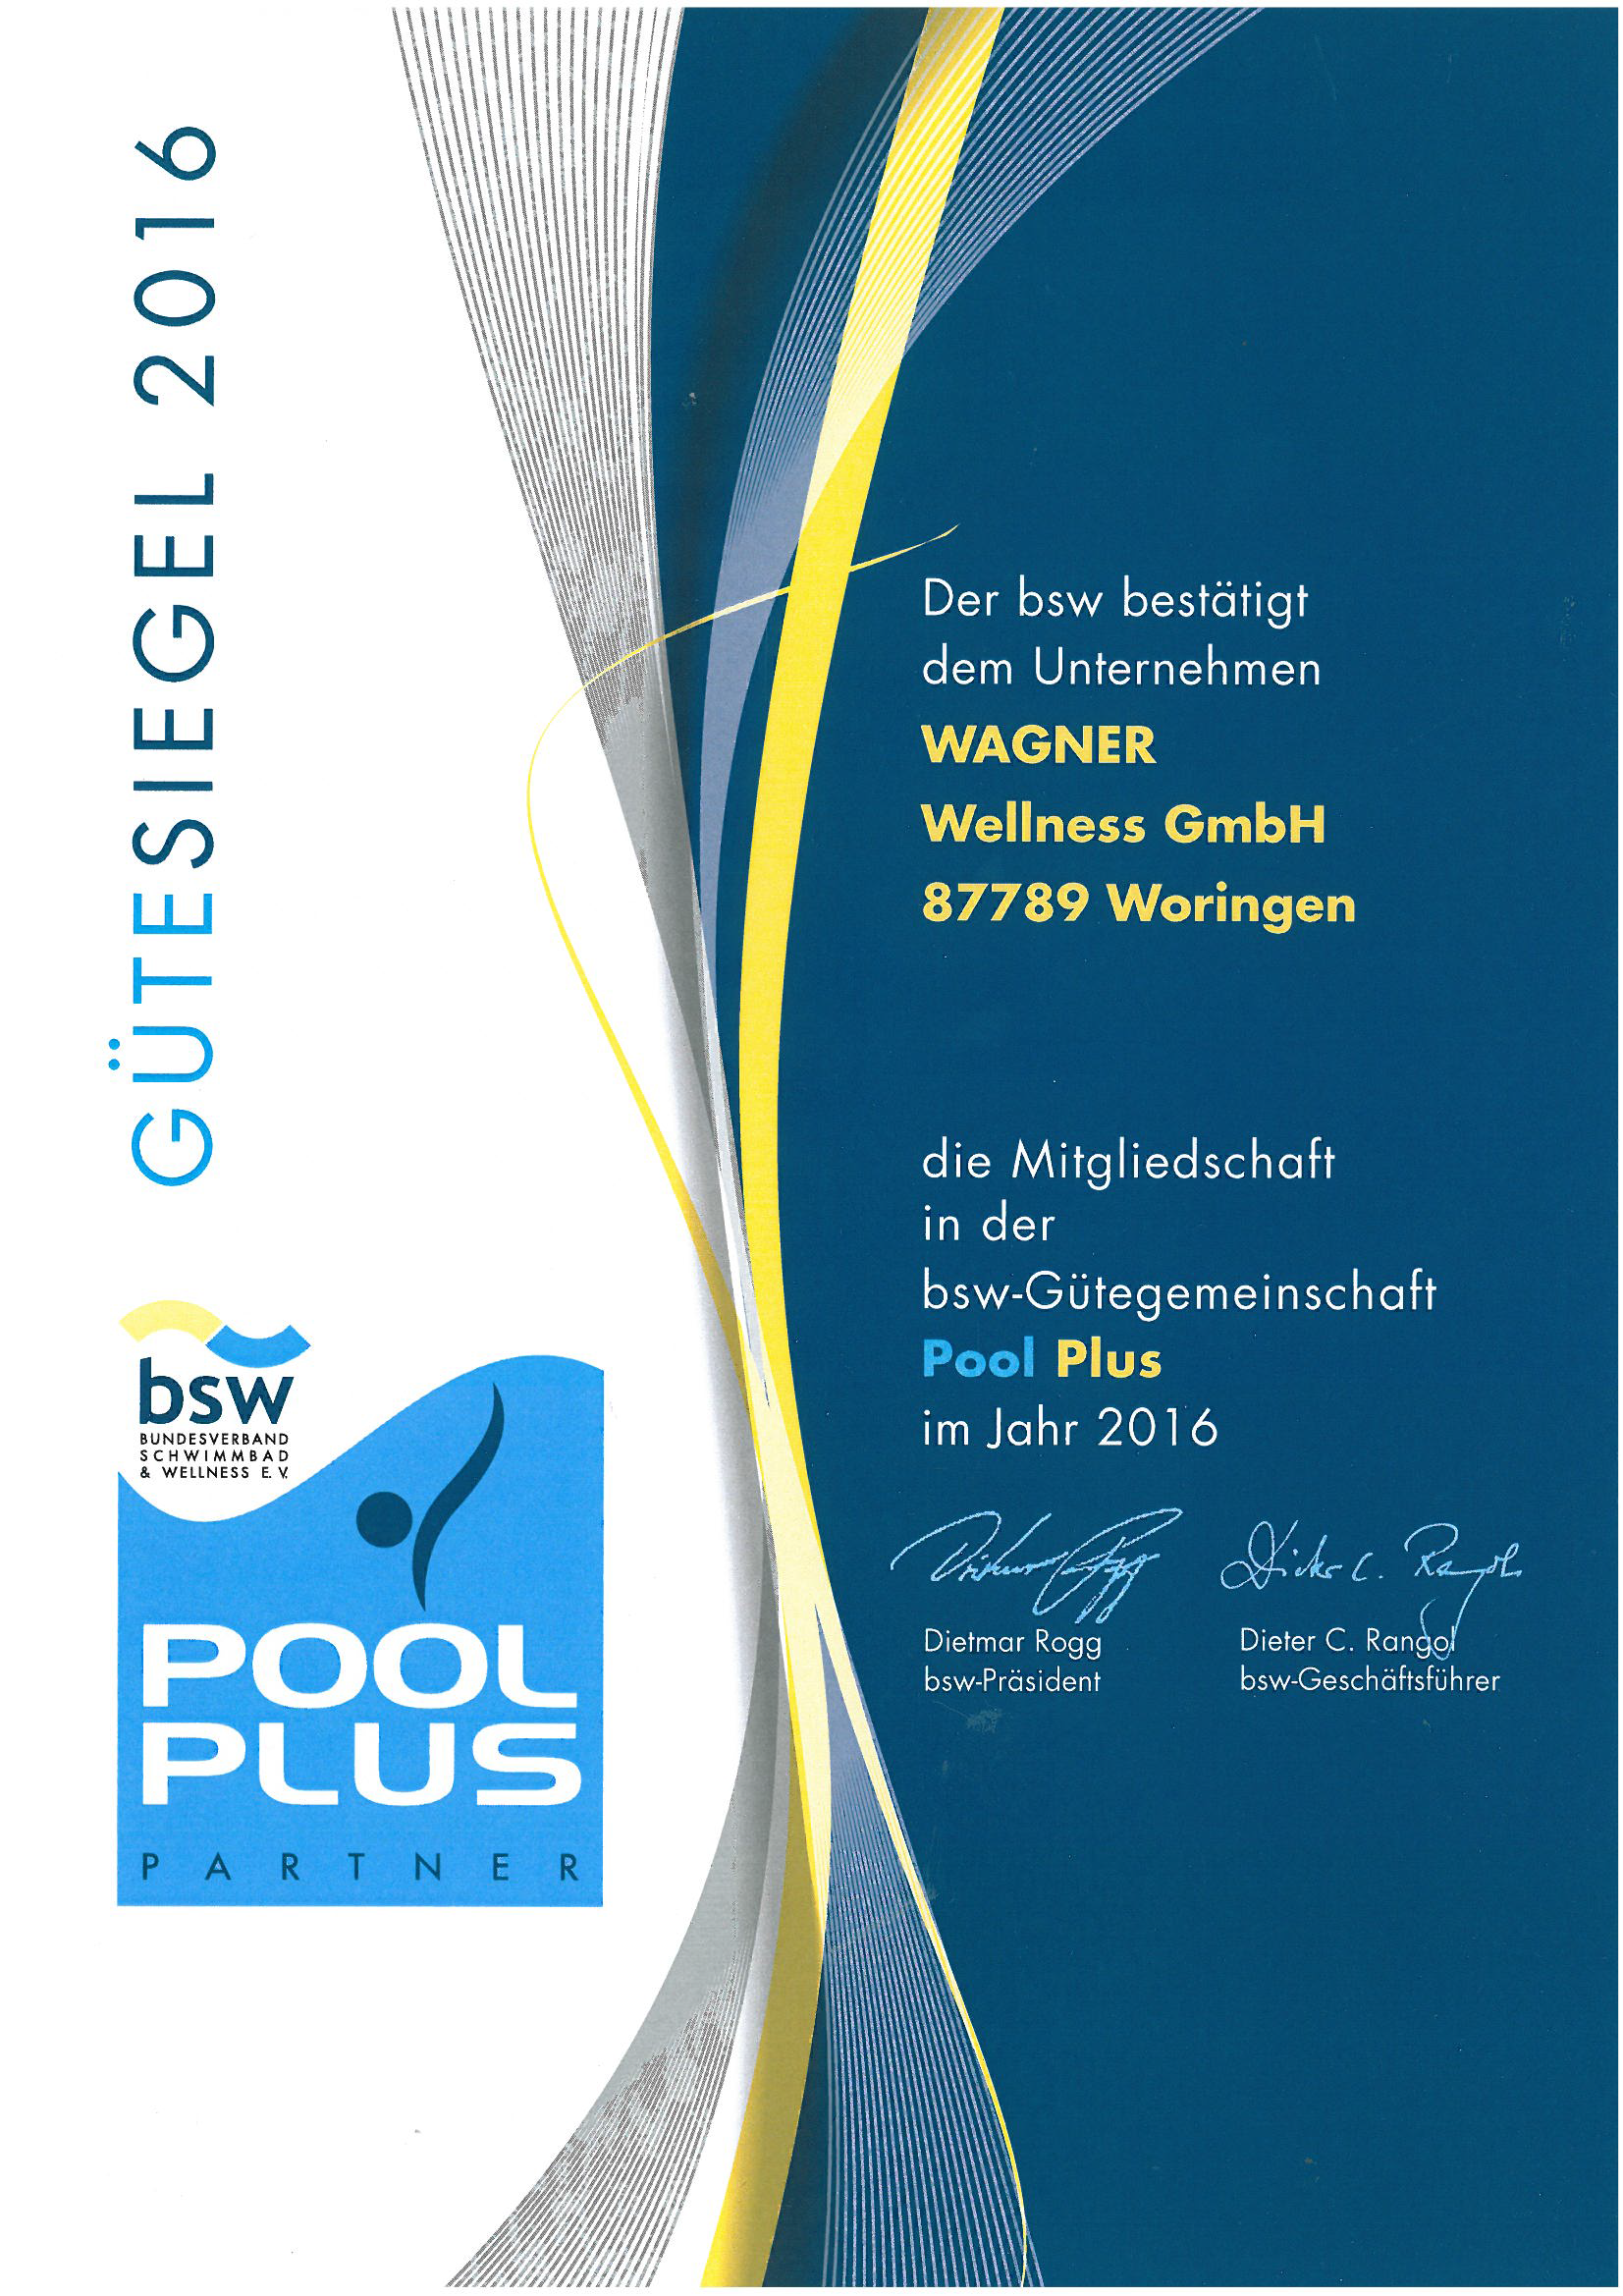 PSW Pool Plus Partner 2016 Wagner Wellness GmbH